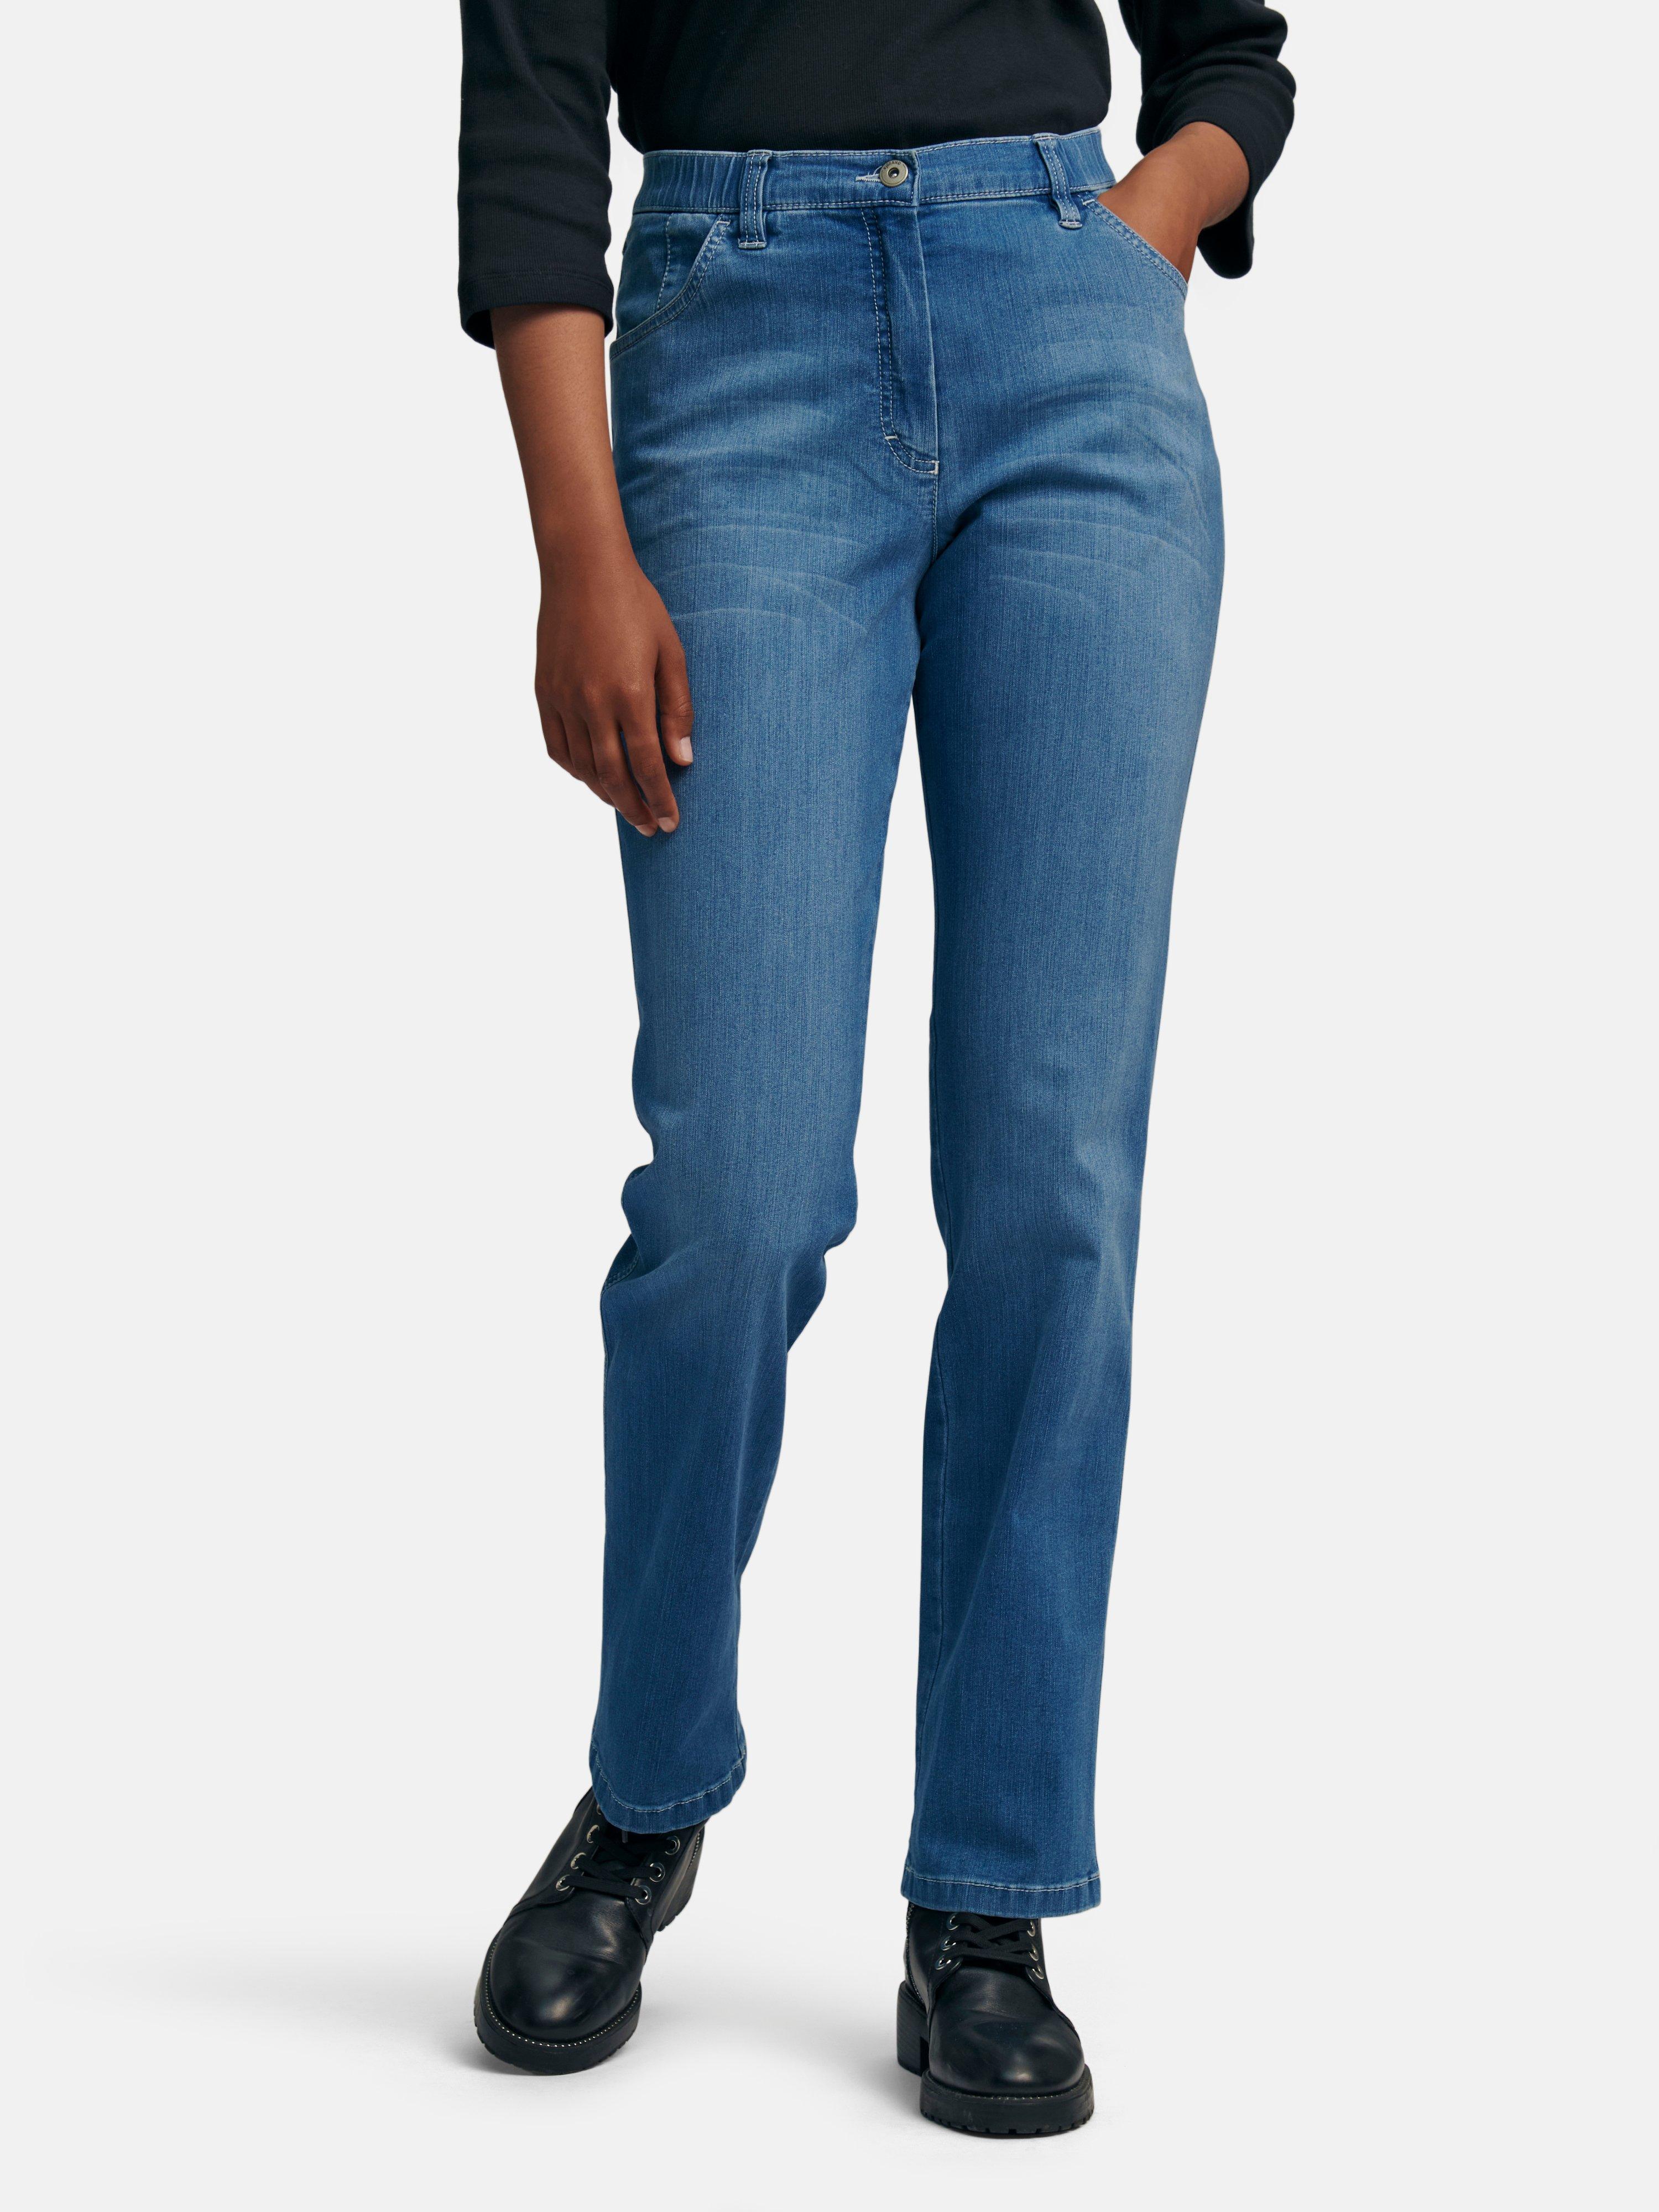 KjBrand - Jeans Modell BettyCS - Bleached denim